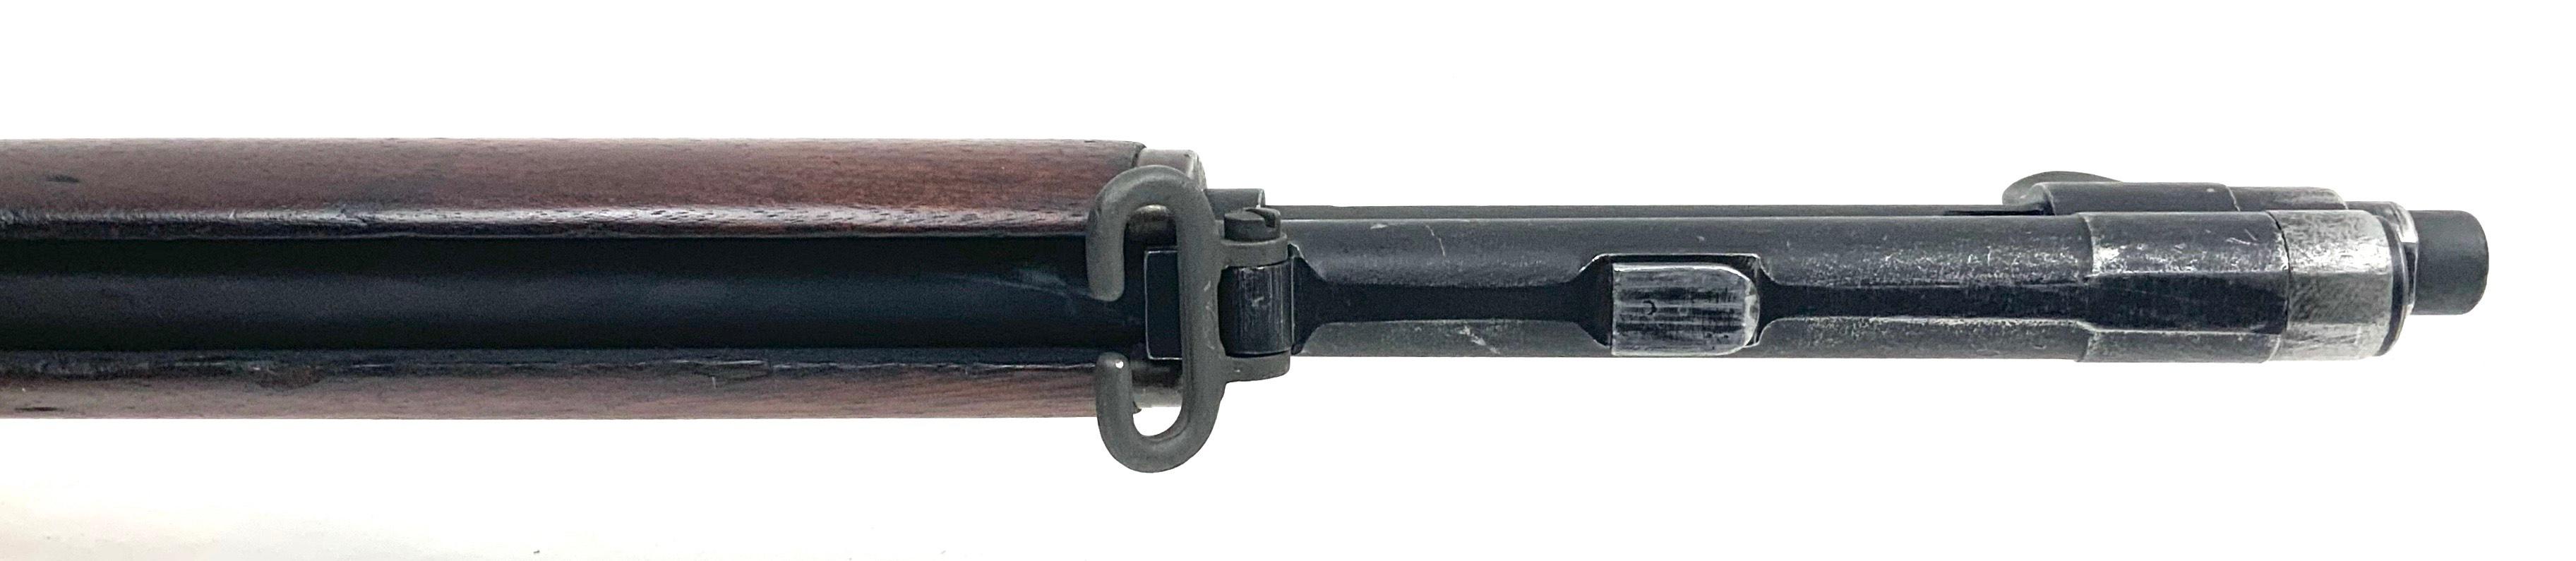 Springfield Armory, M1 Garand, .30-06 Sprg, s/n 2056428, rifle, brl length